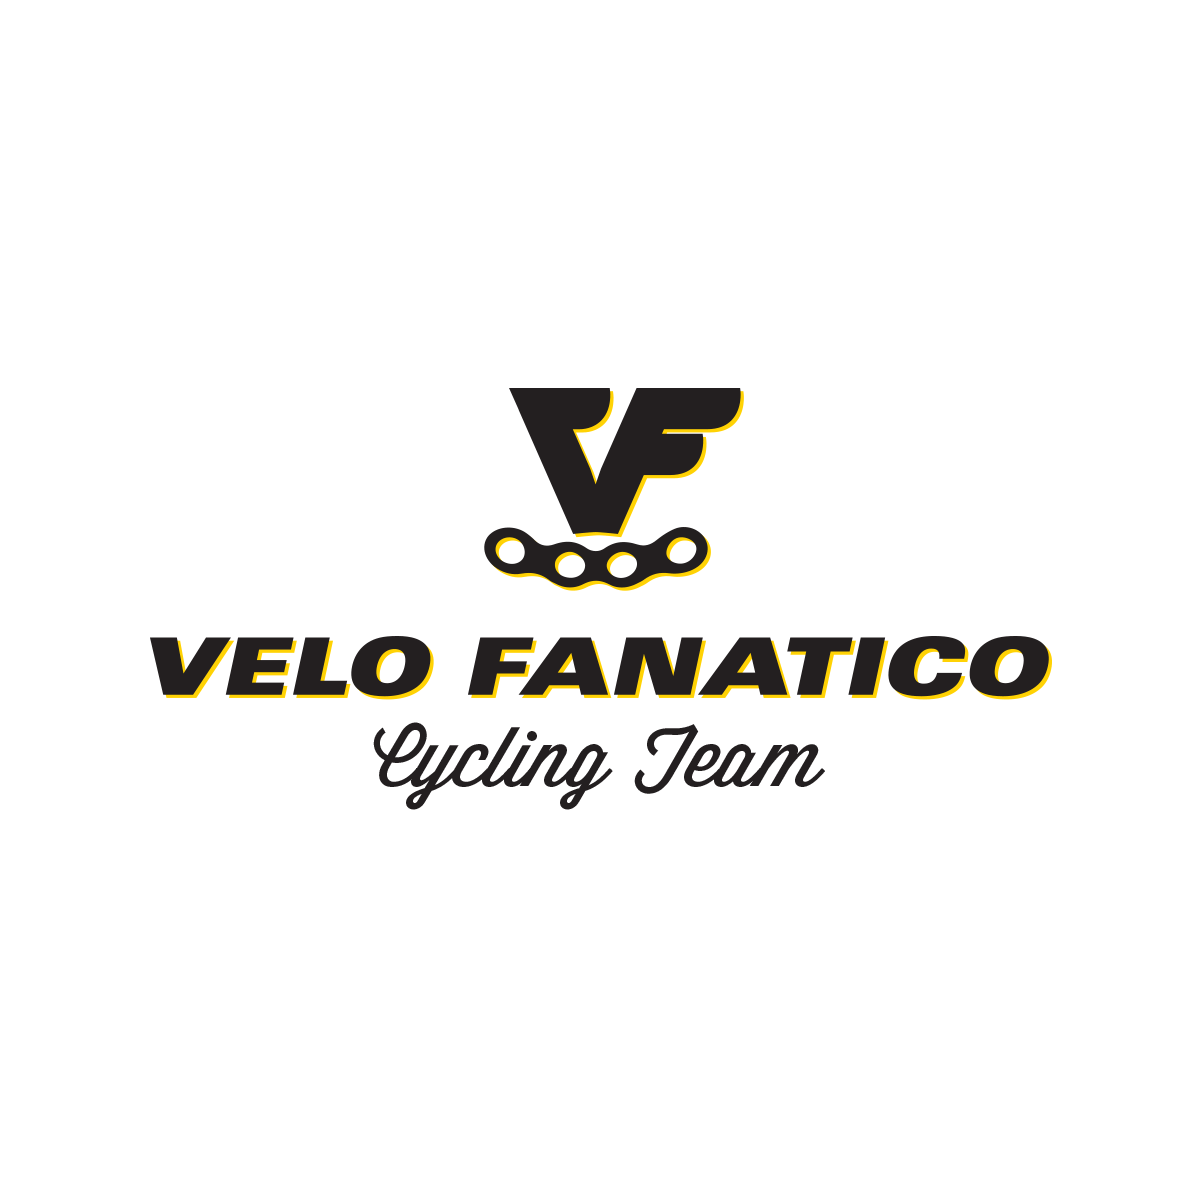 Cycling team logo